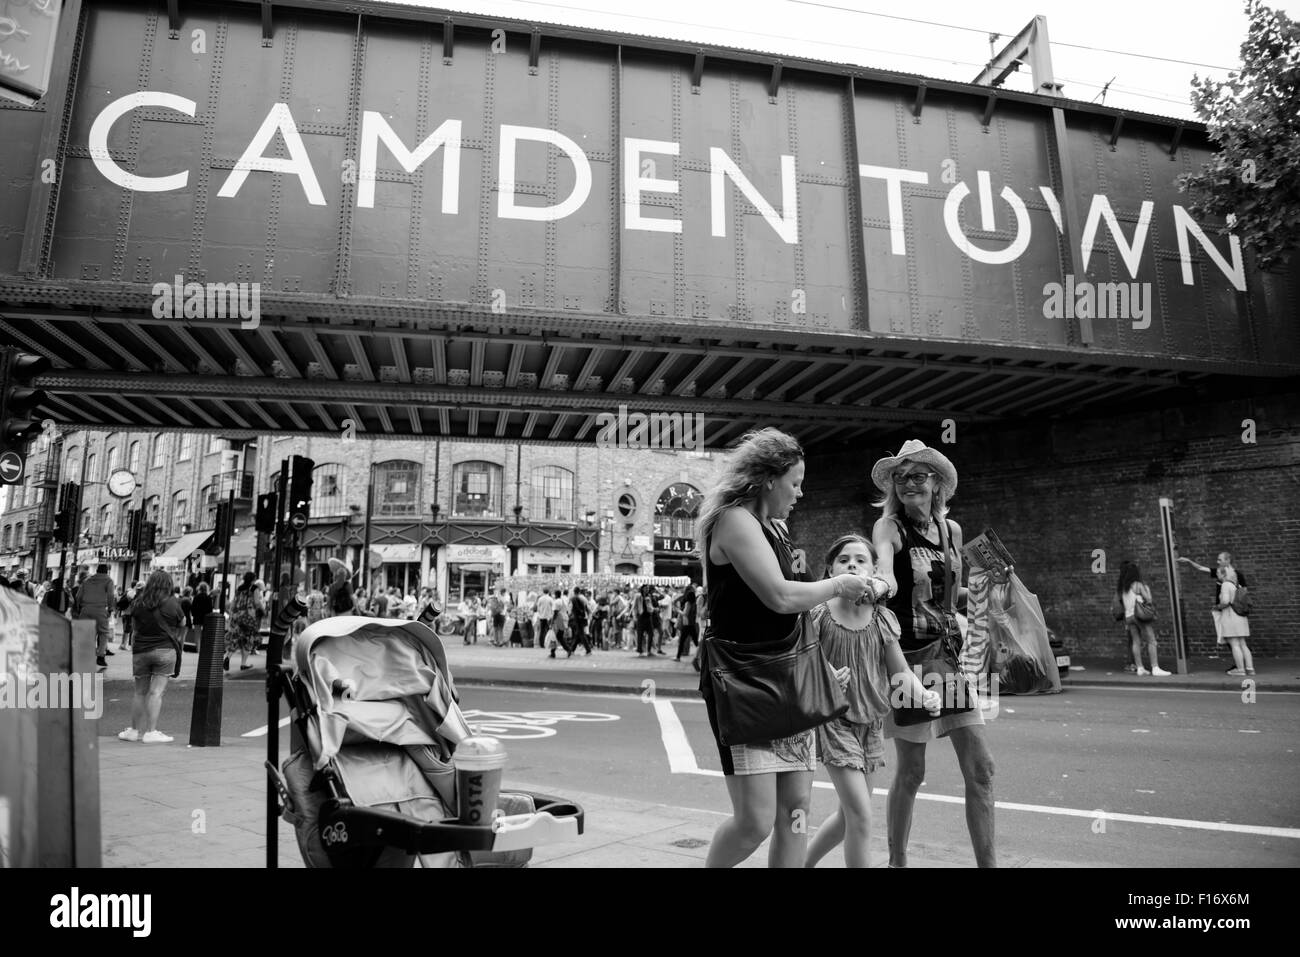 Camden Town street view - bridge. Stock Photo